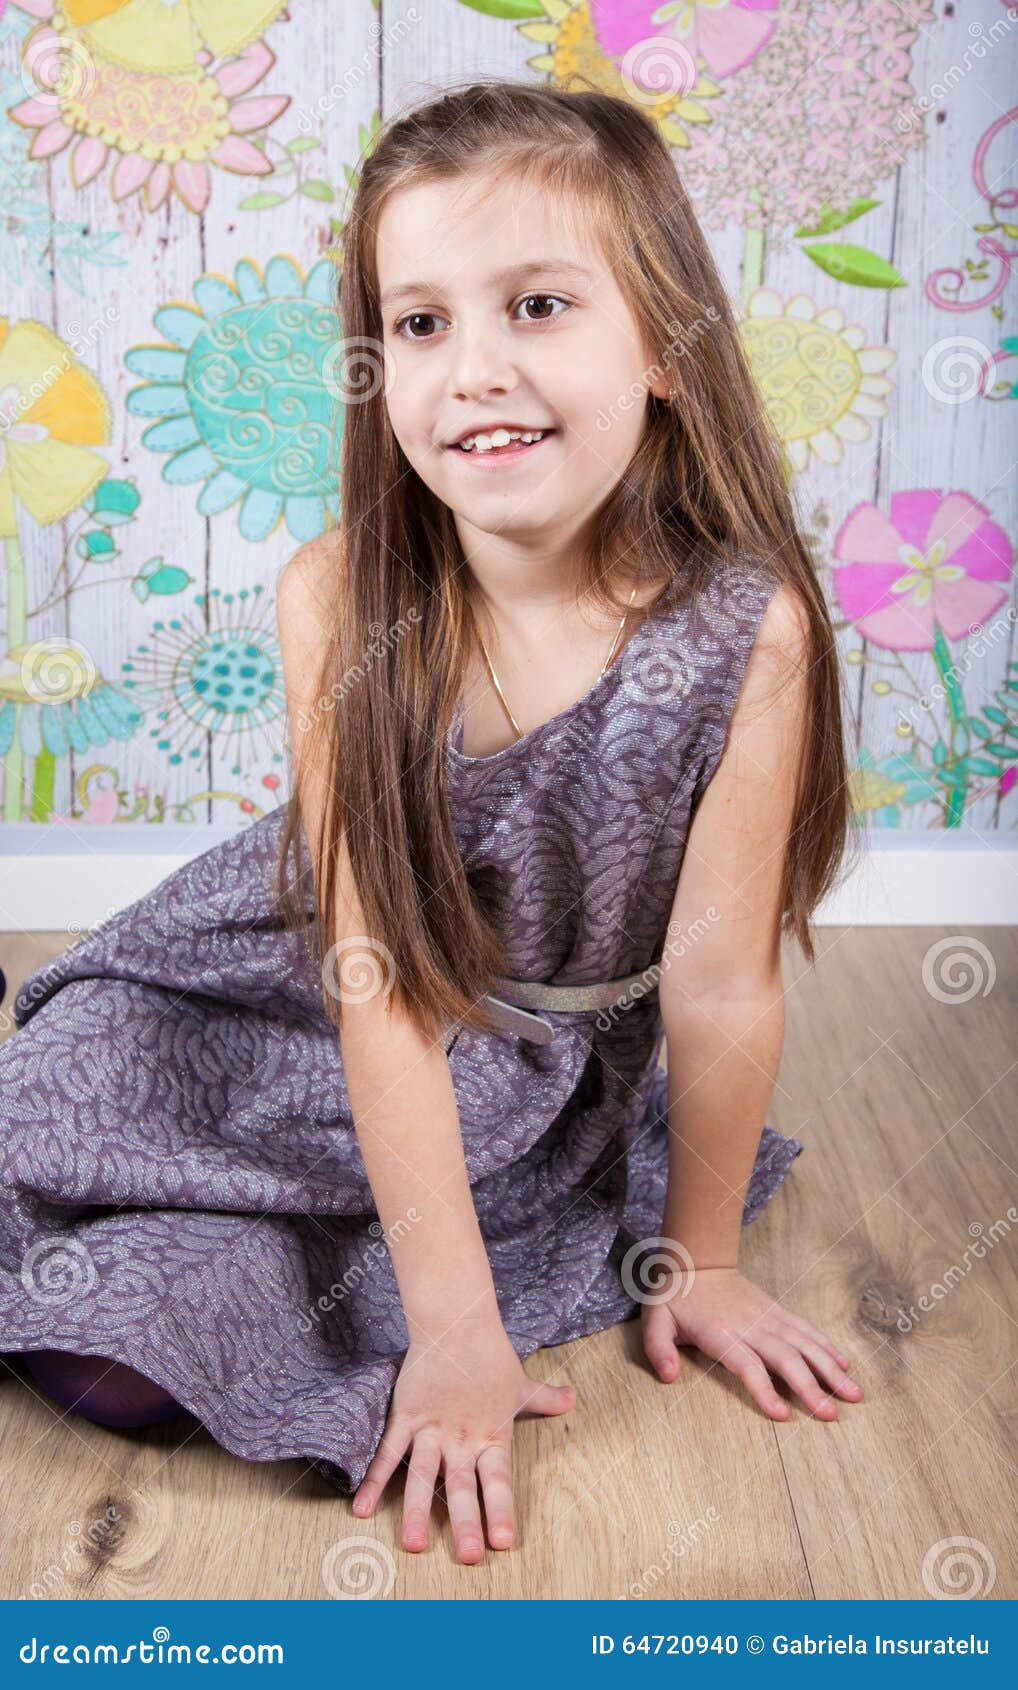 8 year old girl stock photo. Image of model, little, modern - 64720940